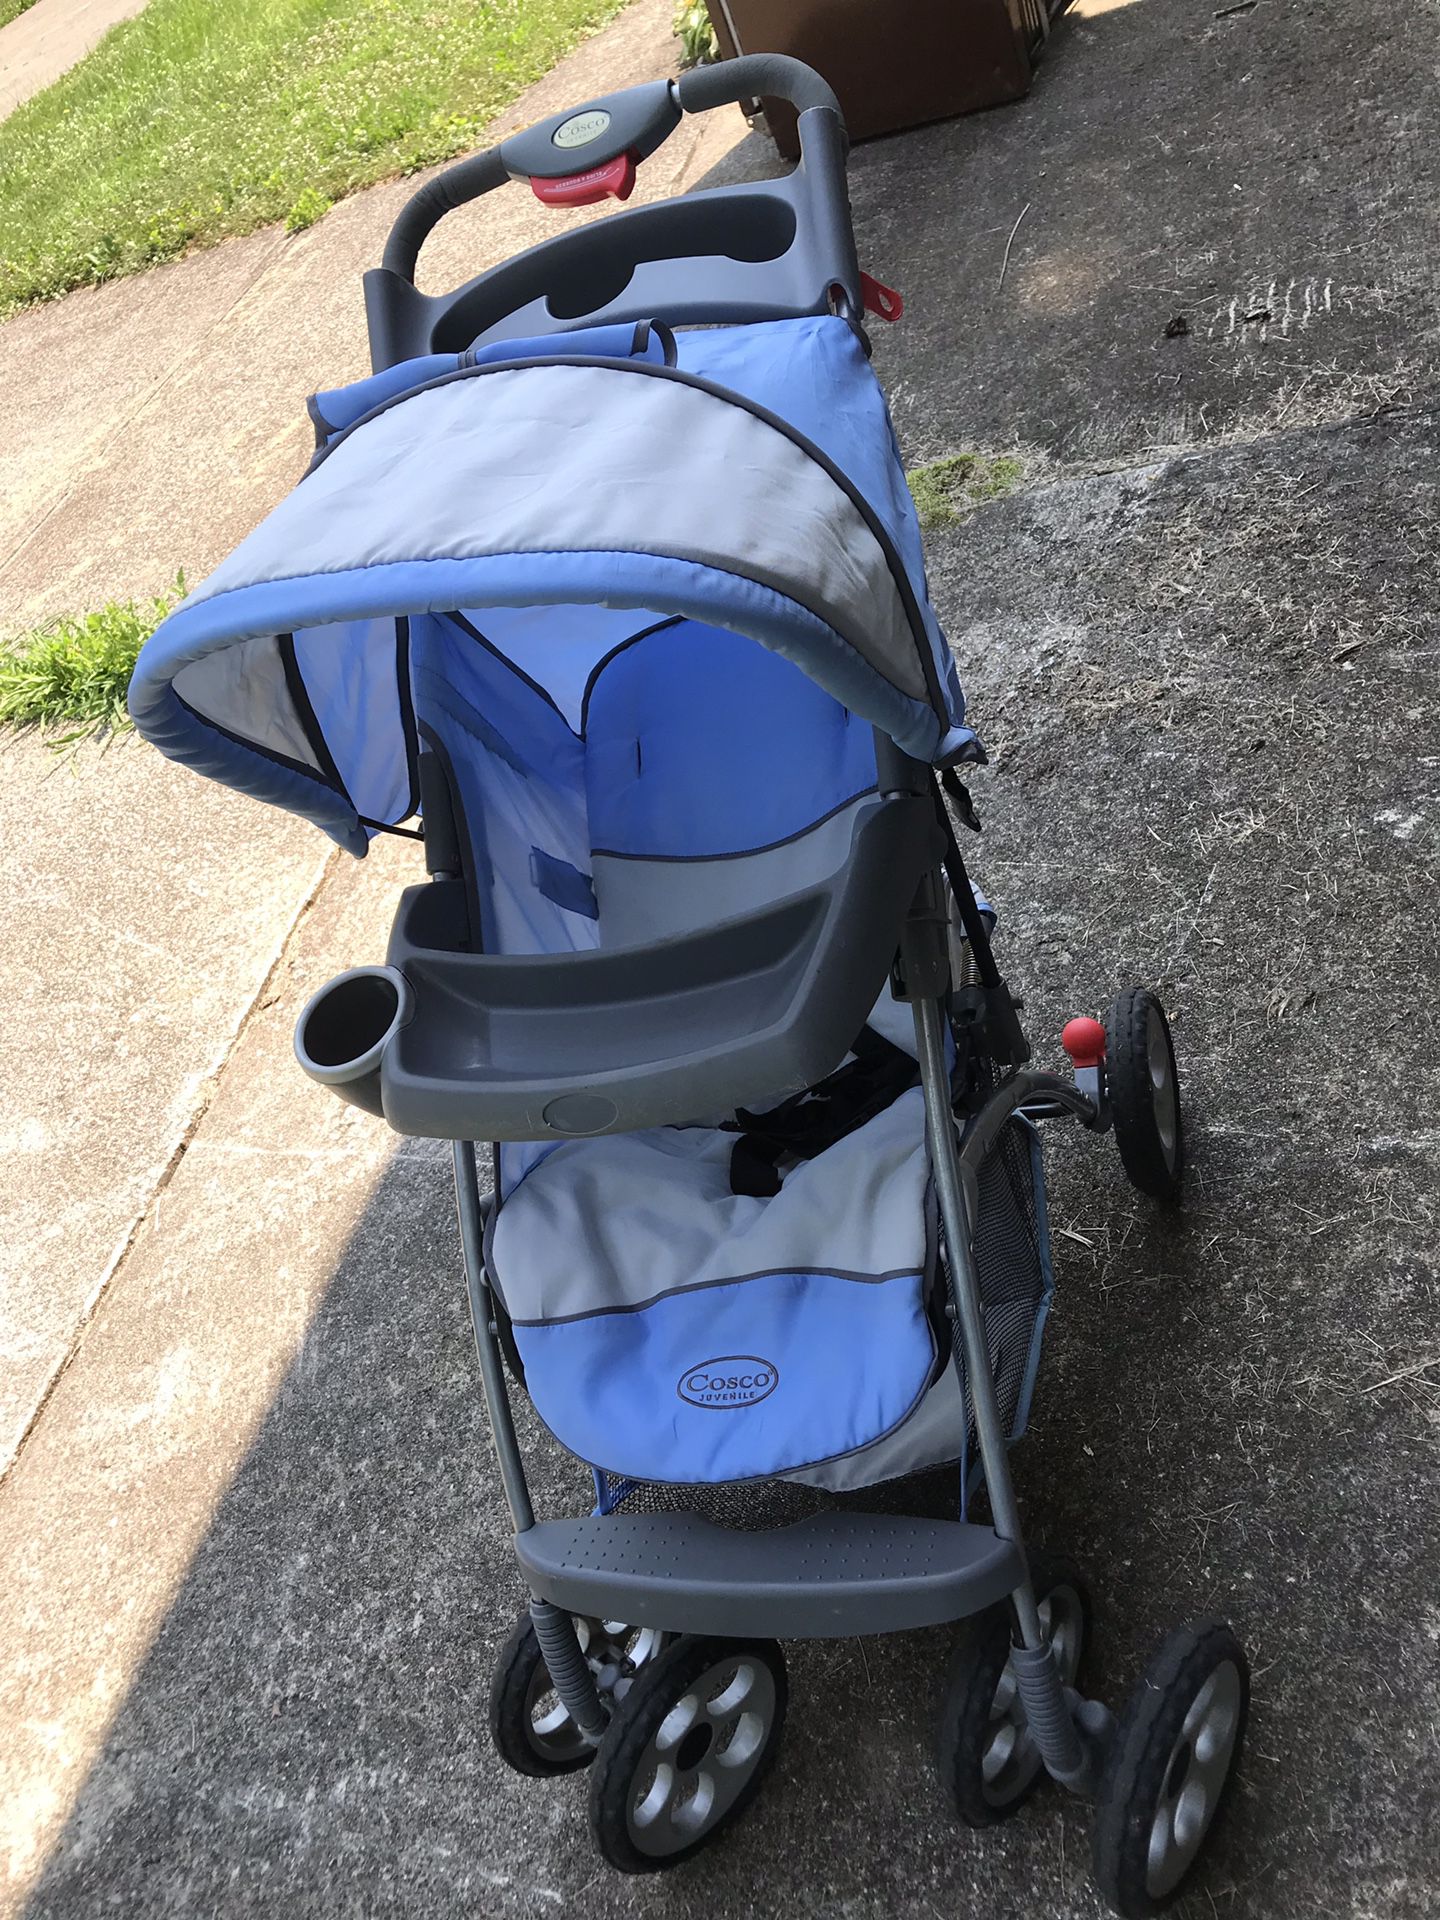 Baby stroller $10 clean